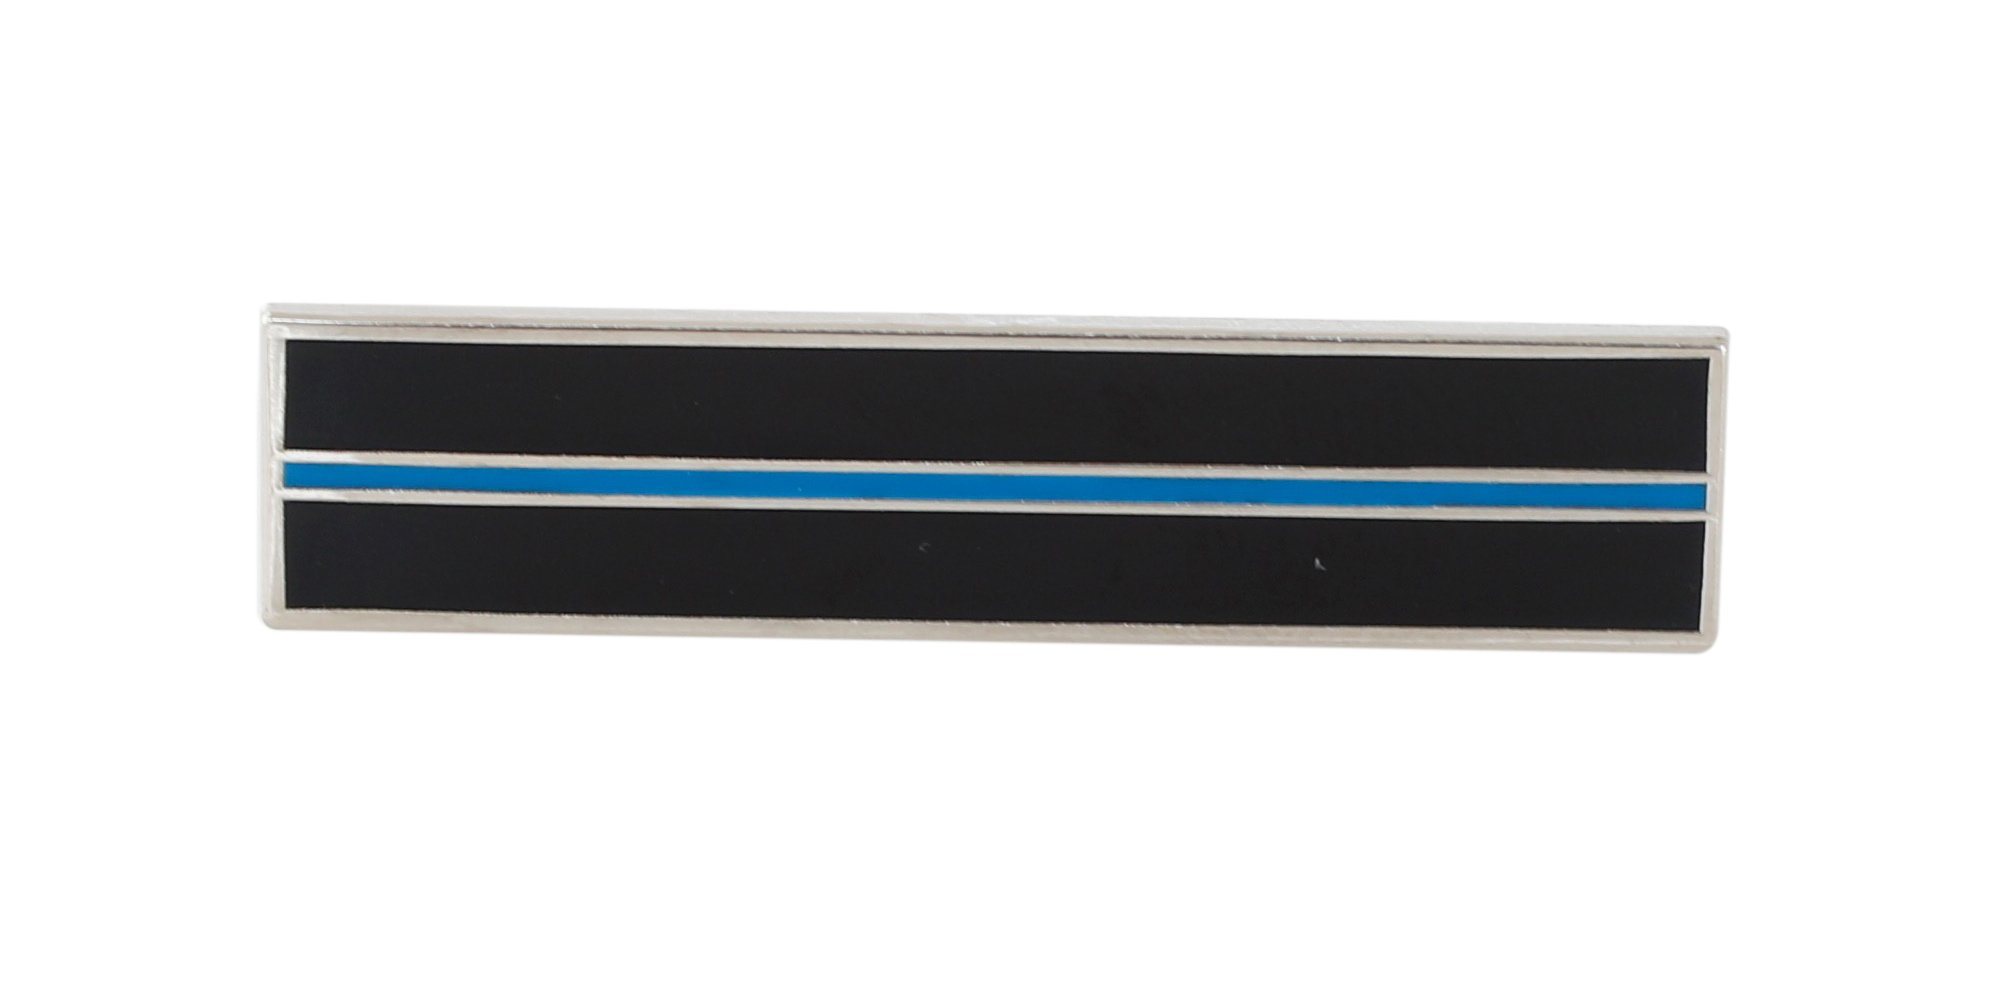 Thin Blue Line Silver Plated Service Bar Pin Pin WizardPins 5 Pins 